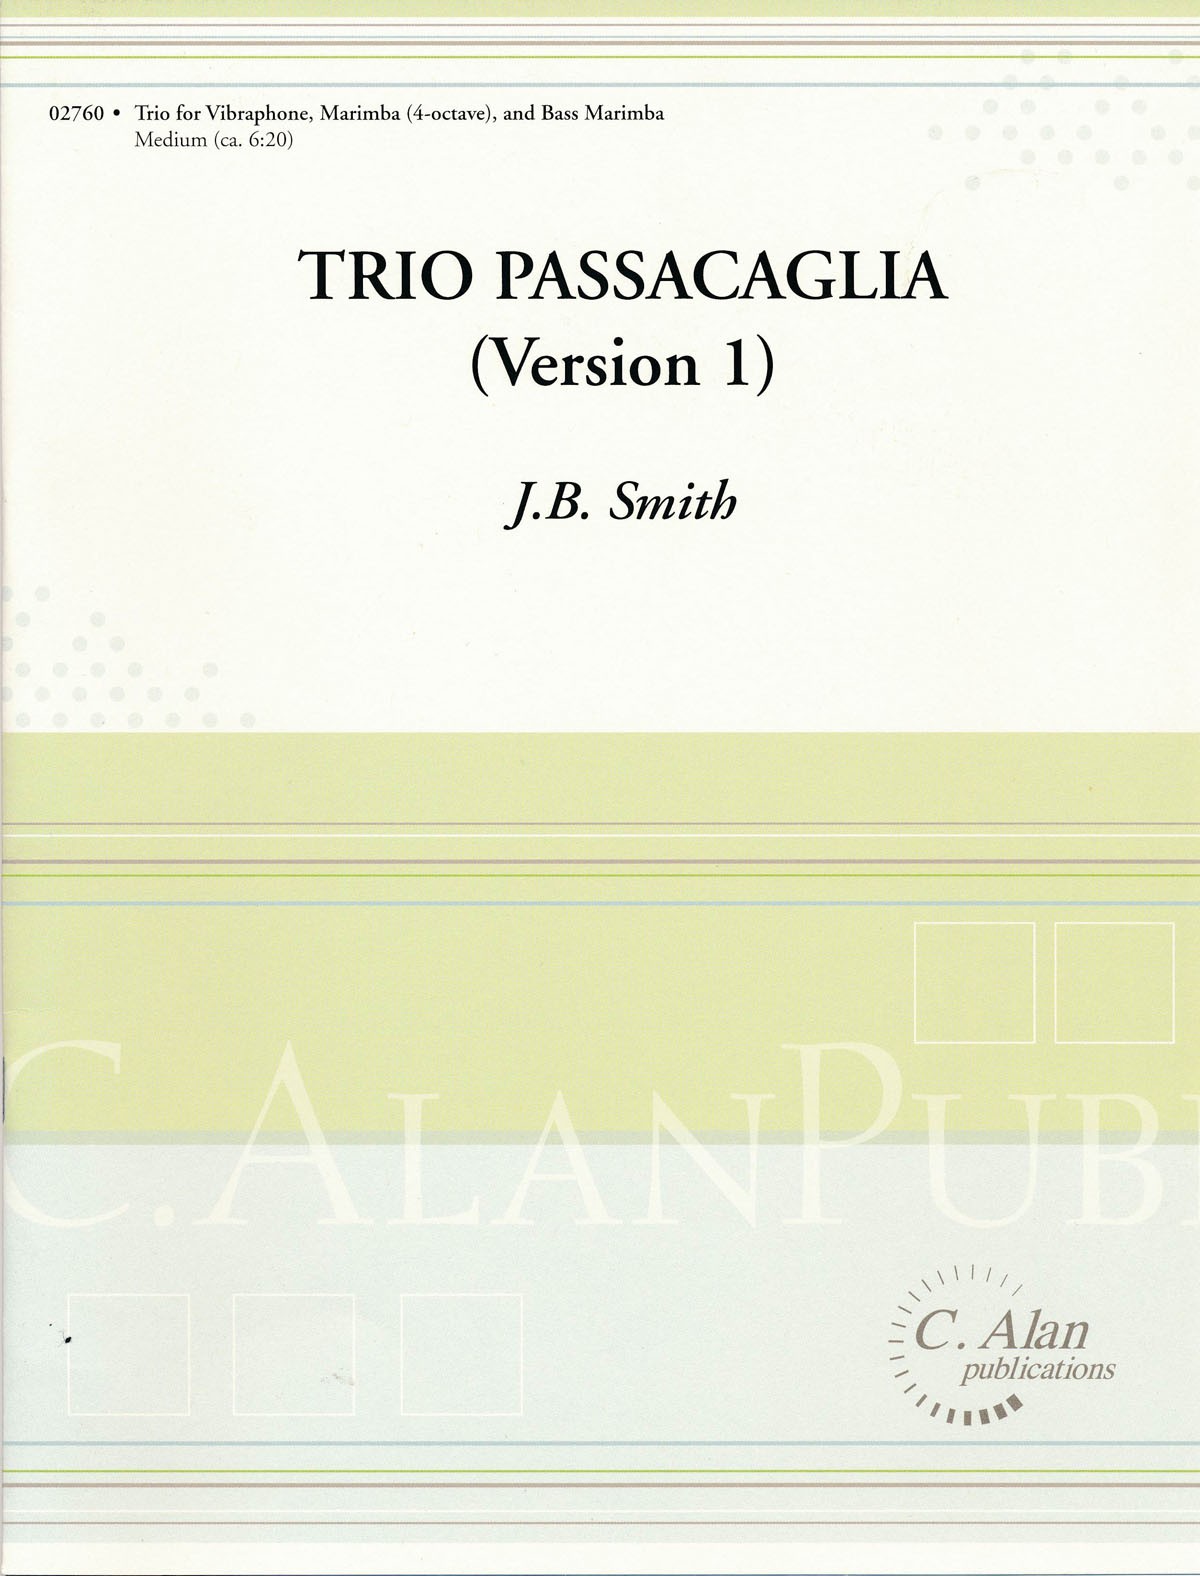 Trio Passacaglia (Version 1) by J B Smith